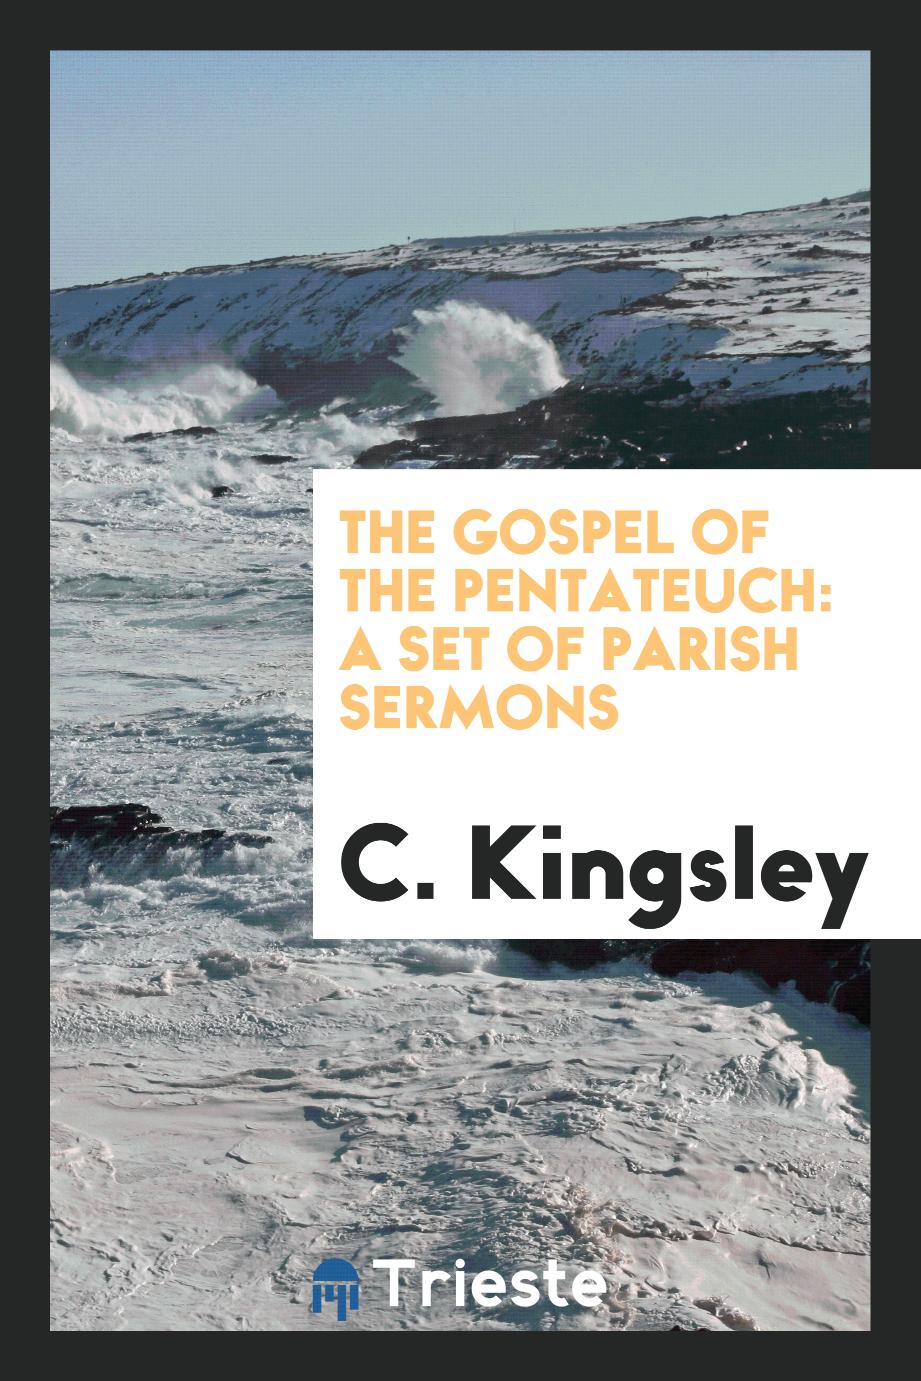 The Gospel of the Pentateuch: a set of parish sermons